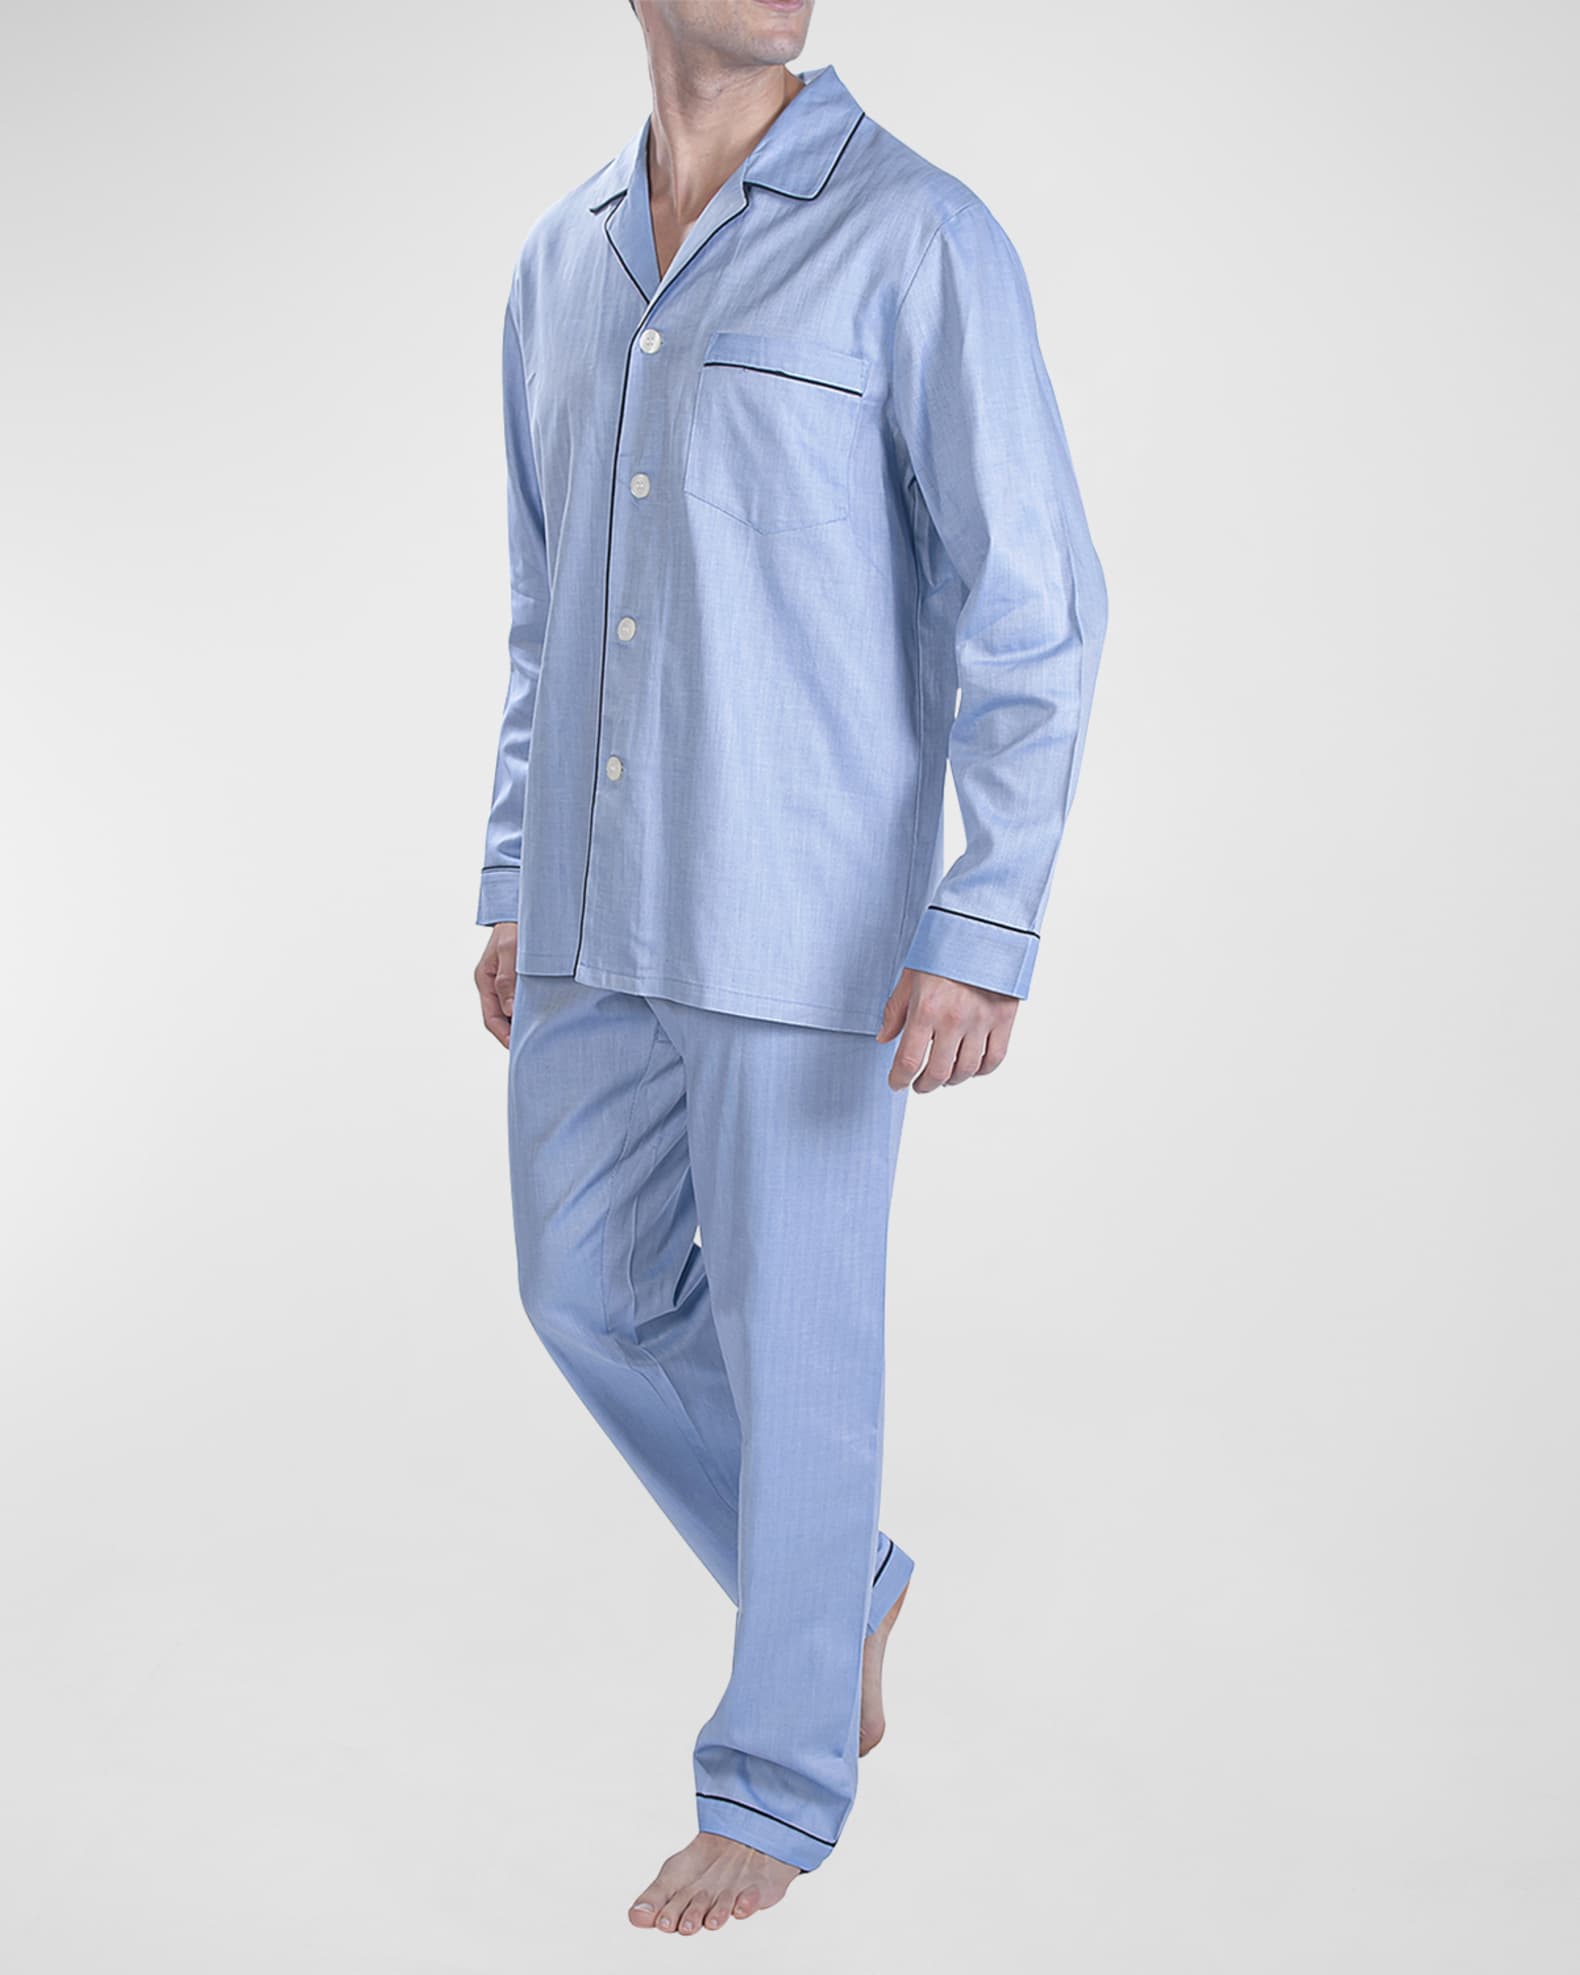 Blue & White Stripe Pajama Set by Majestic International